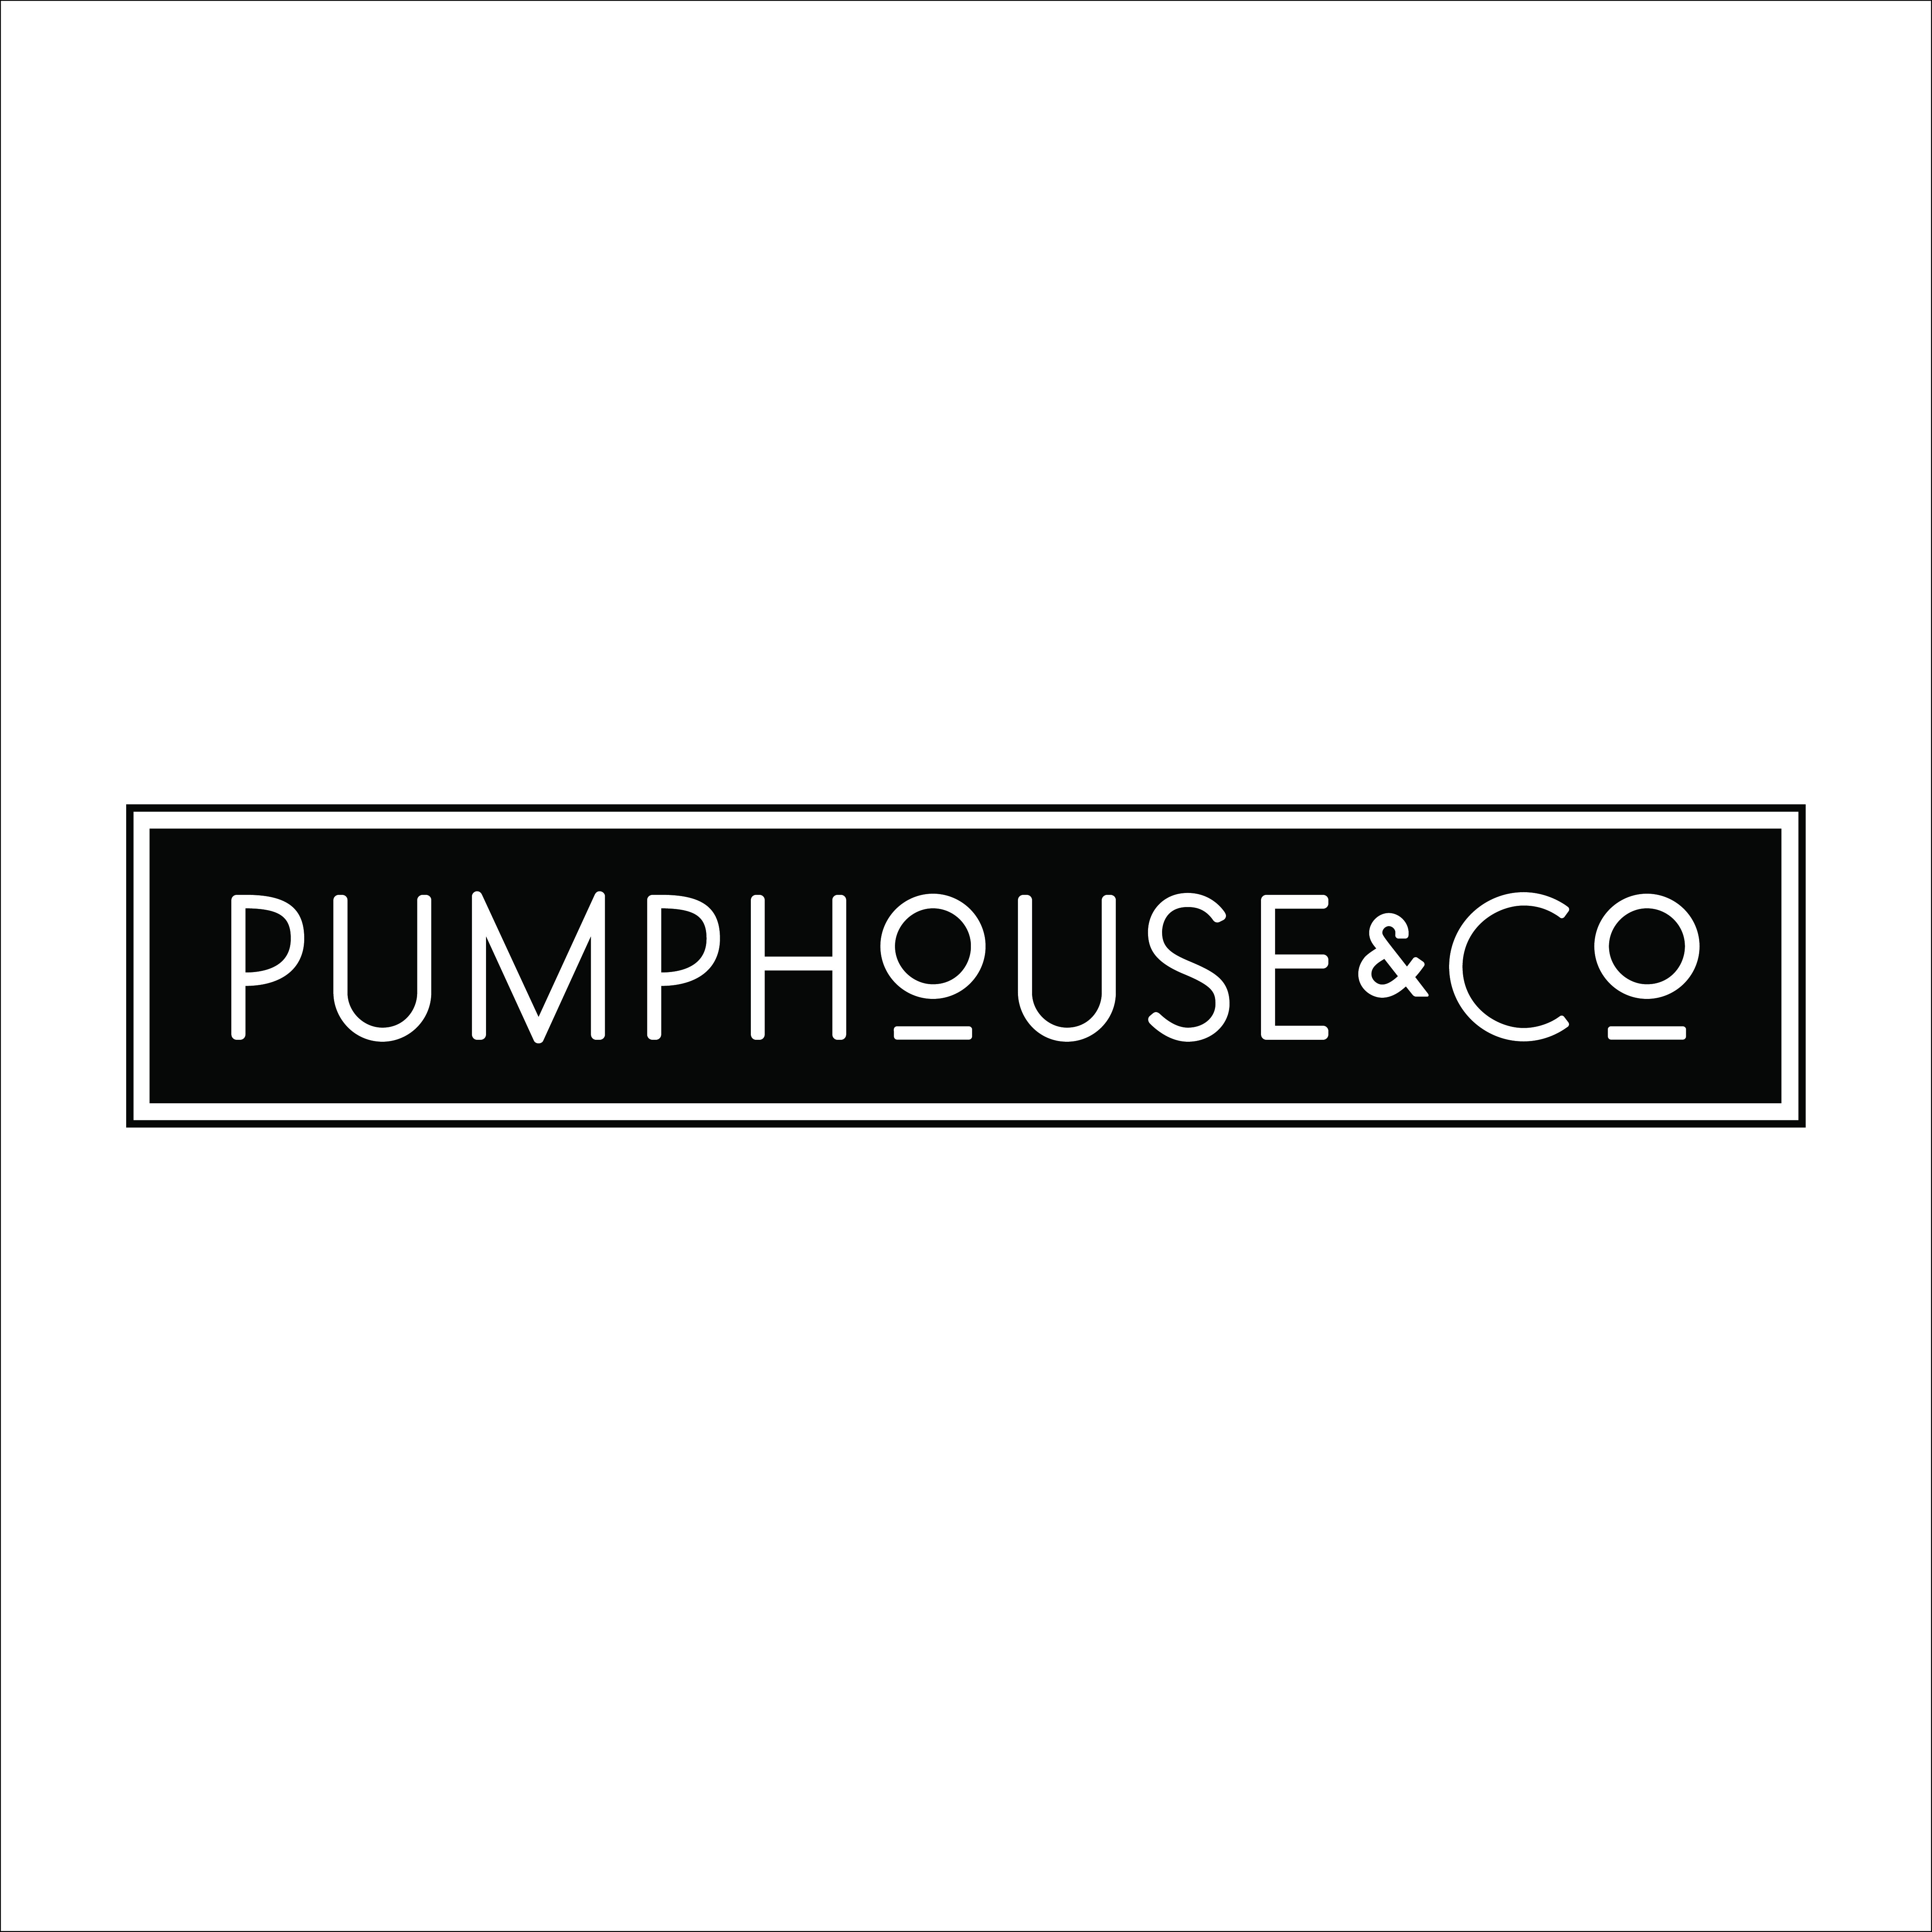 Pumphouse & Co